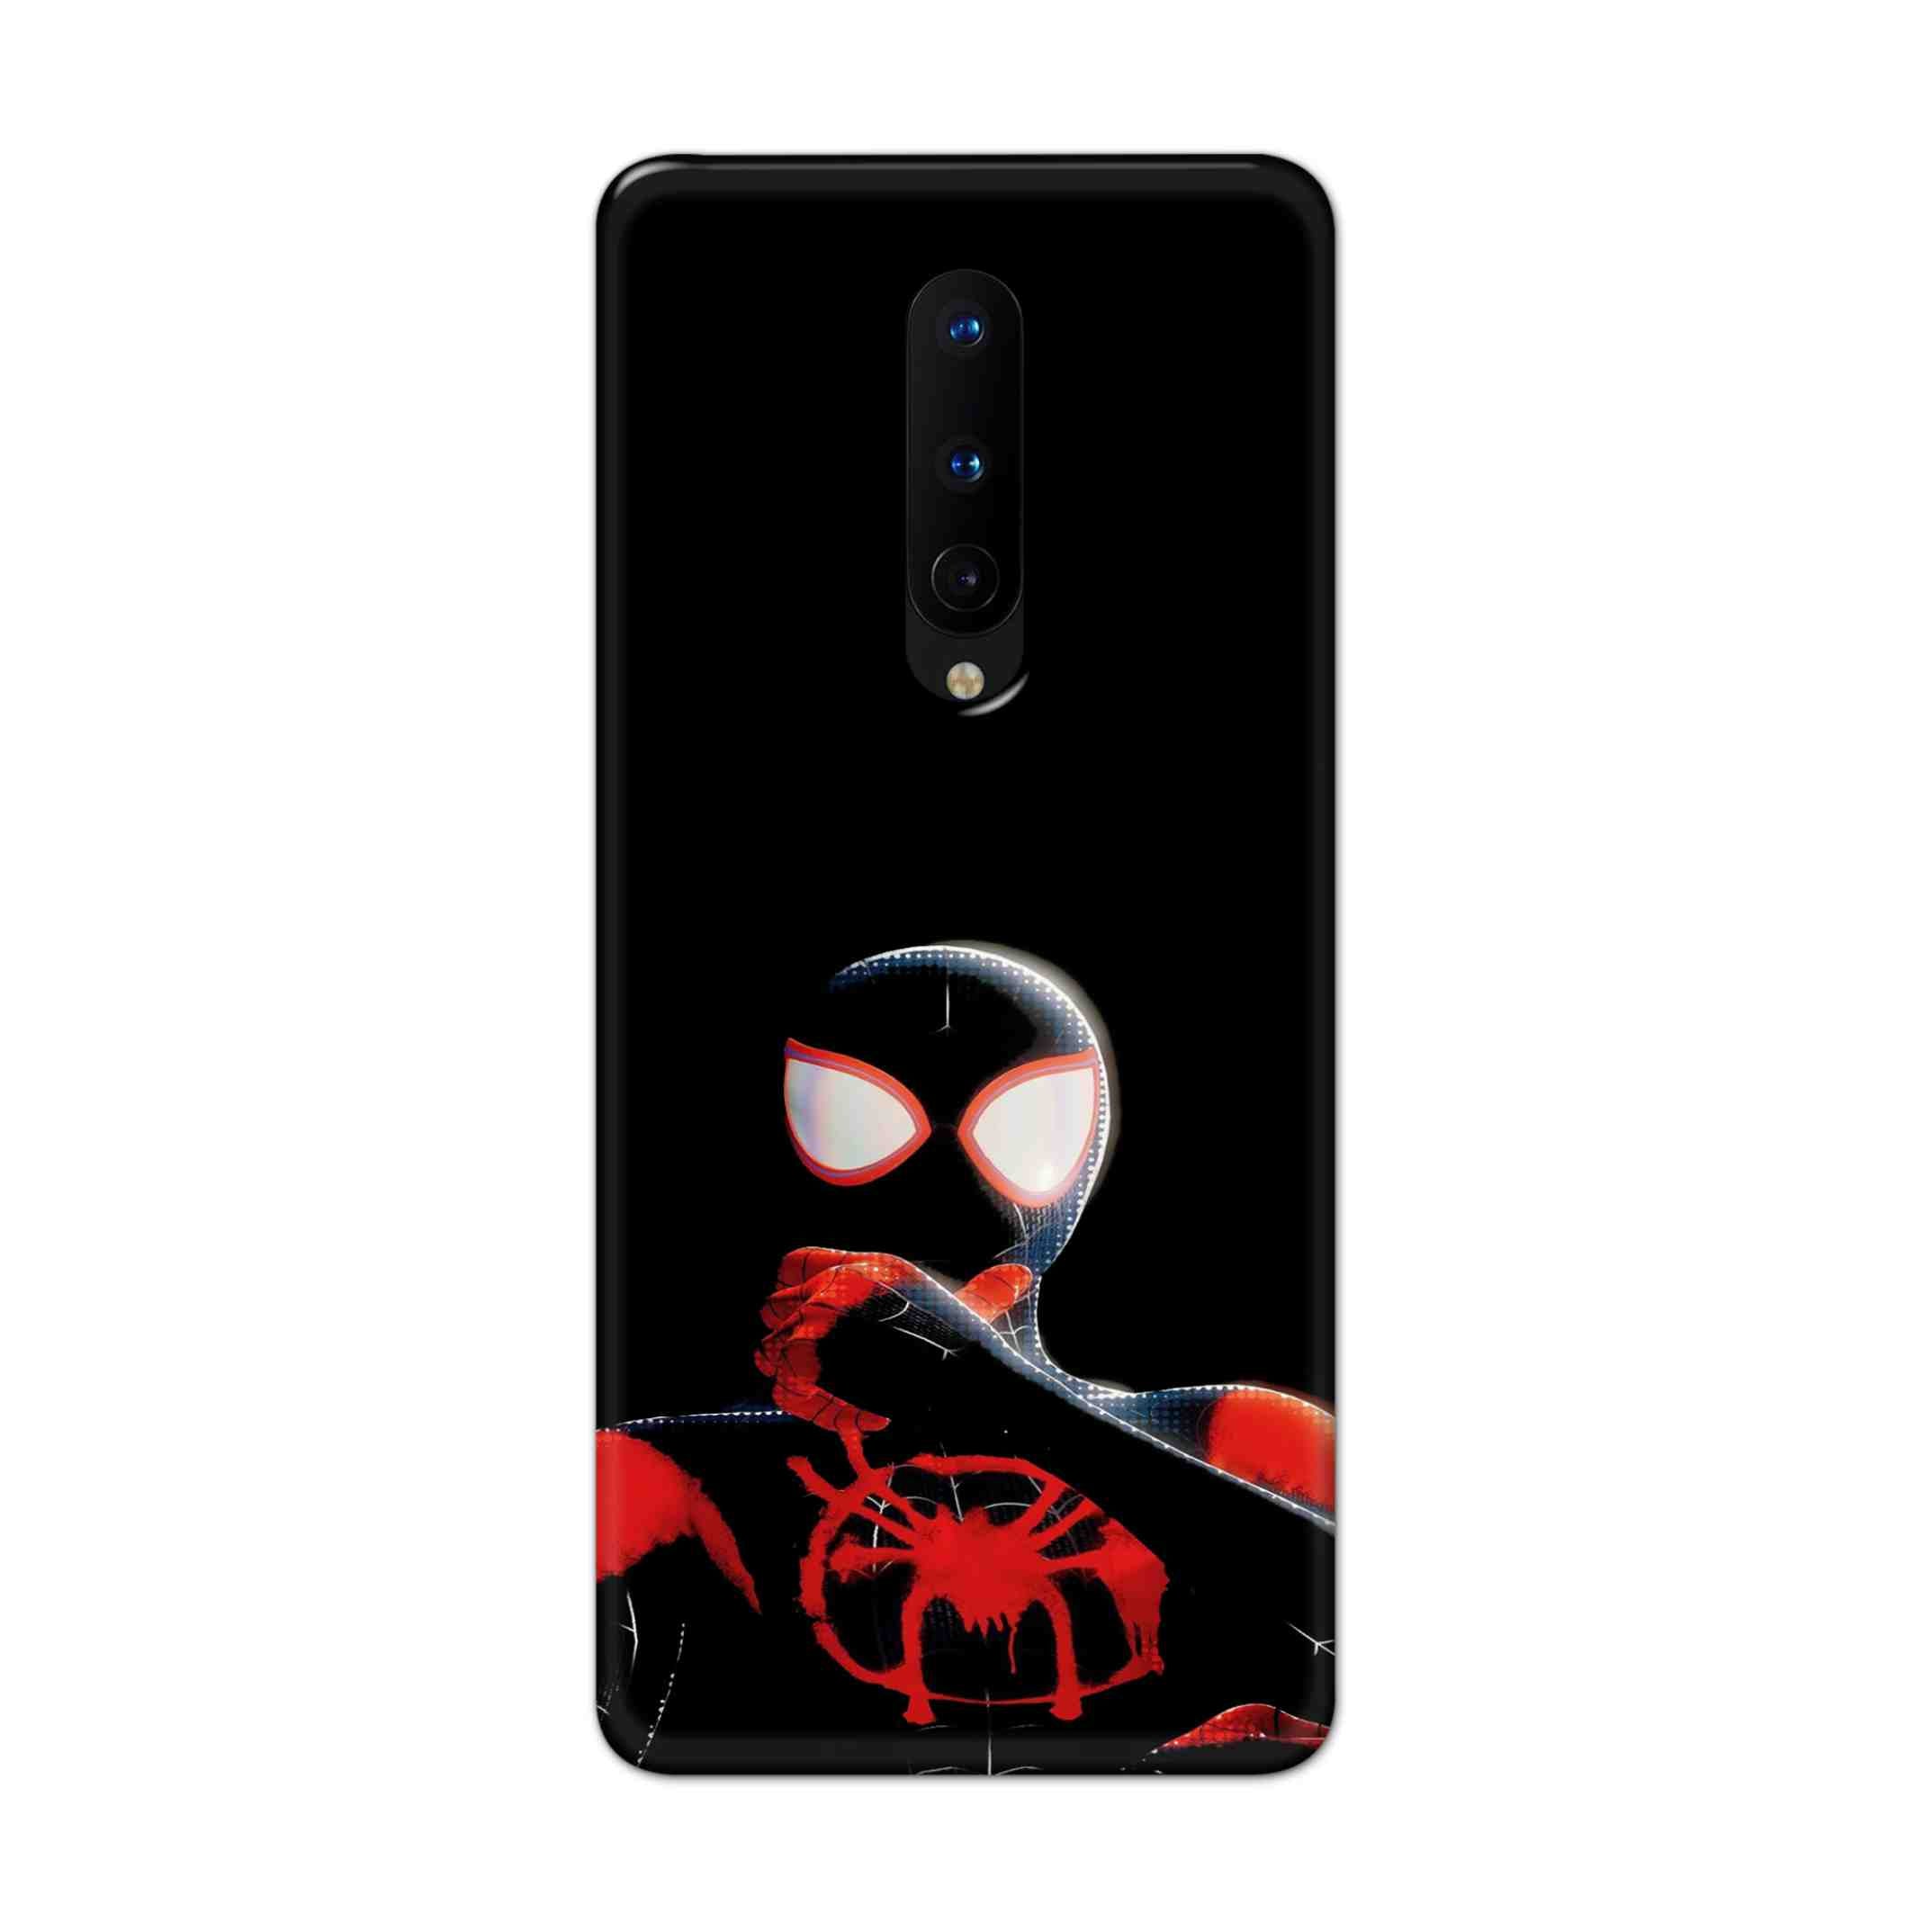 Buy Black Spiderman Hard Back Mobile Phone Case Cover For OnePlus 8 Online